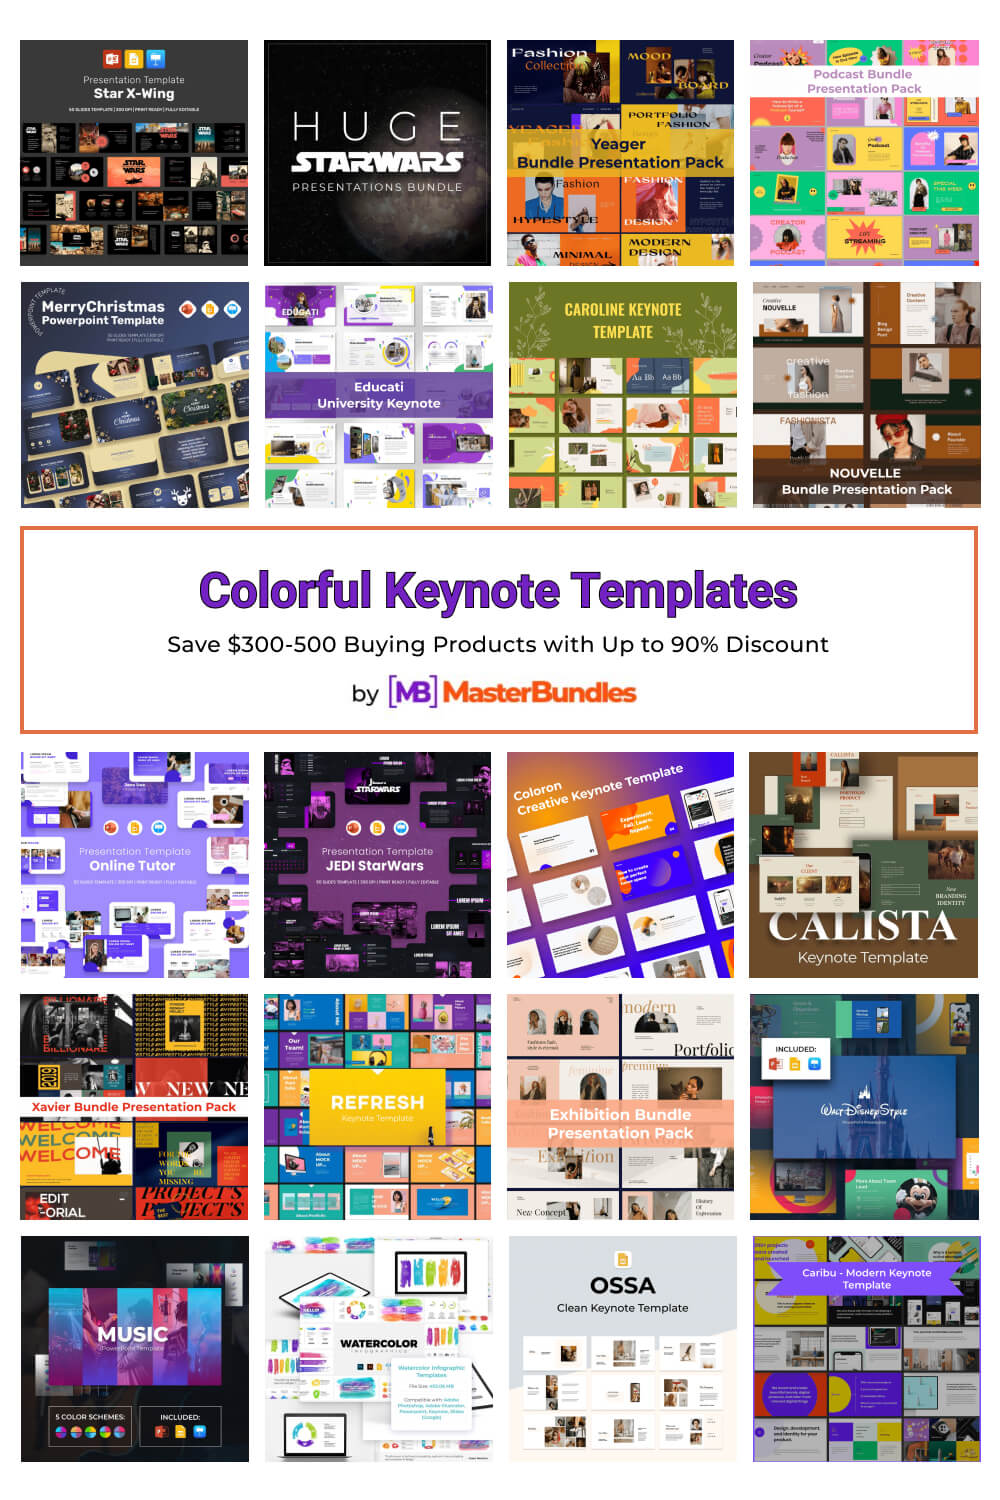 colorful keynote templates pinterest image.